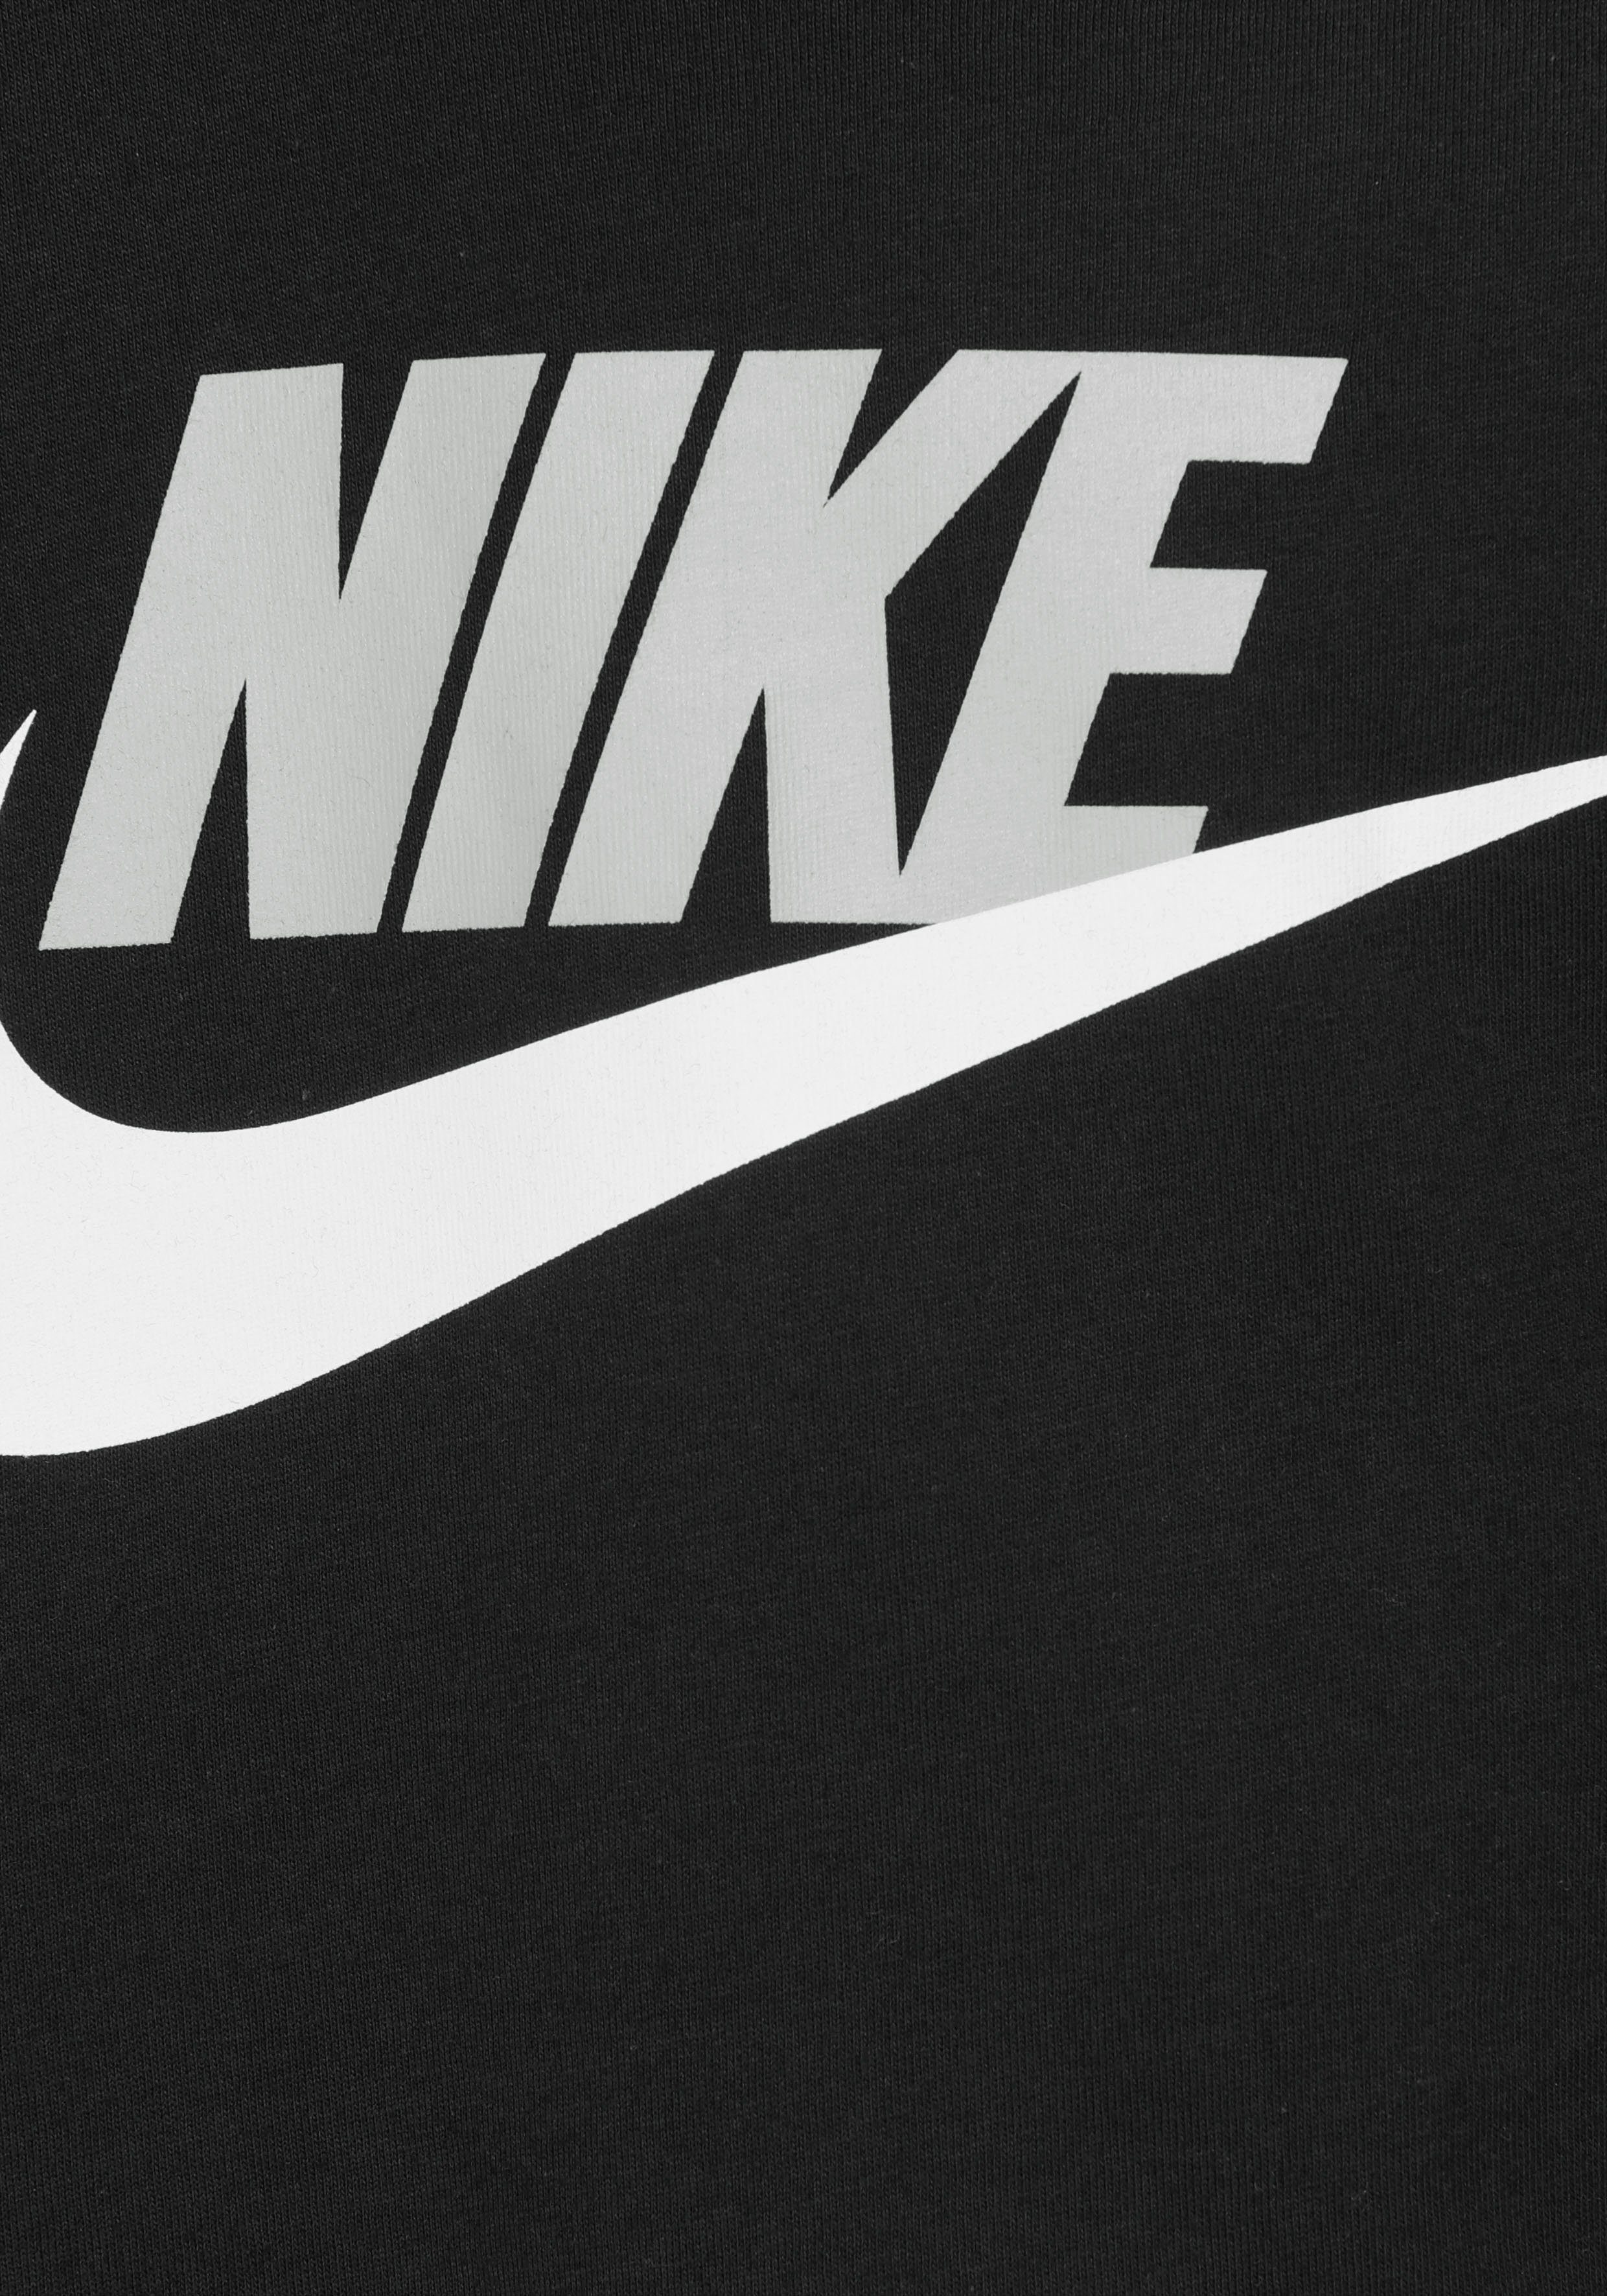 KIDS' Sportswear Nike T-Shirt T-SHIRT schwarz-grau-weiß COTTON BIG